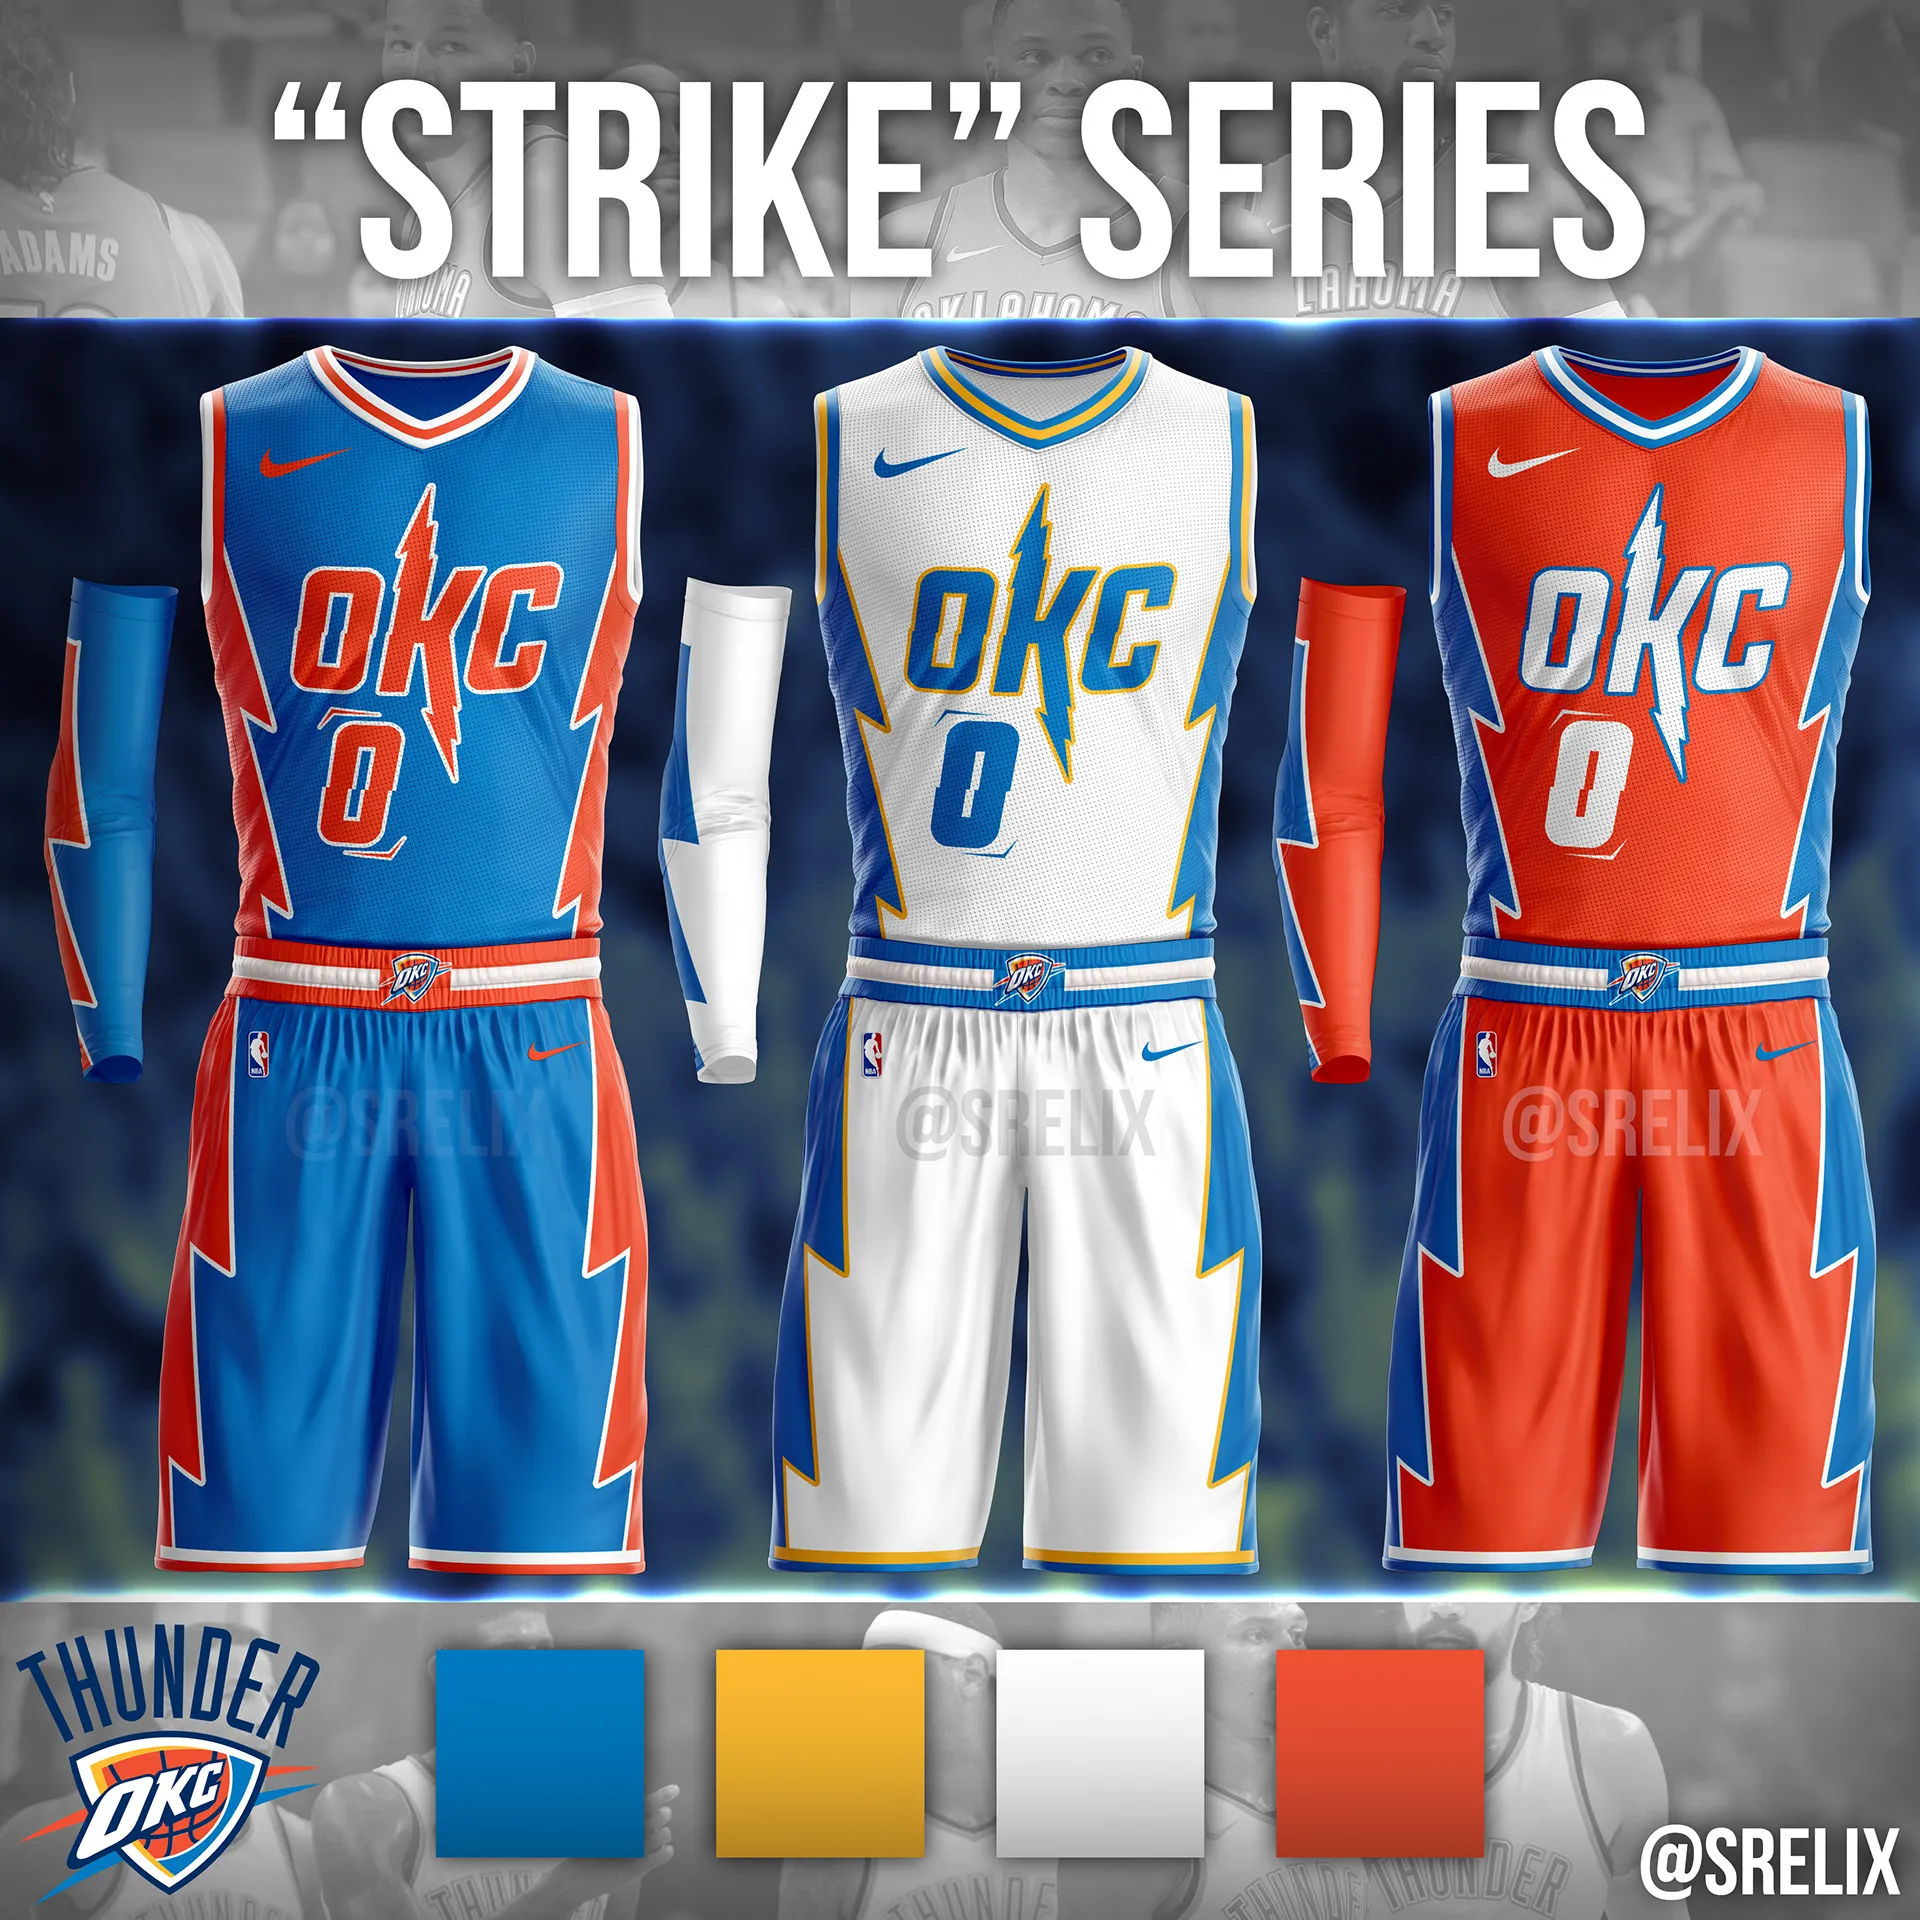 Denver NUGGETS Nike NBA jersey by SOTO Uniforms Design